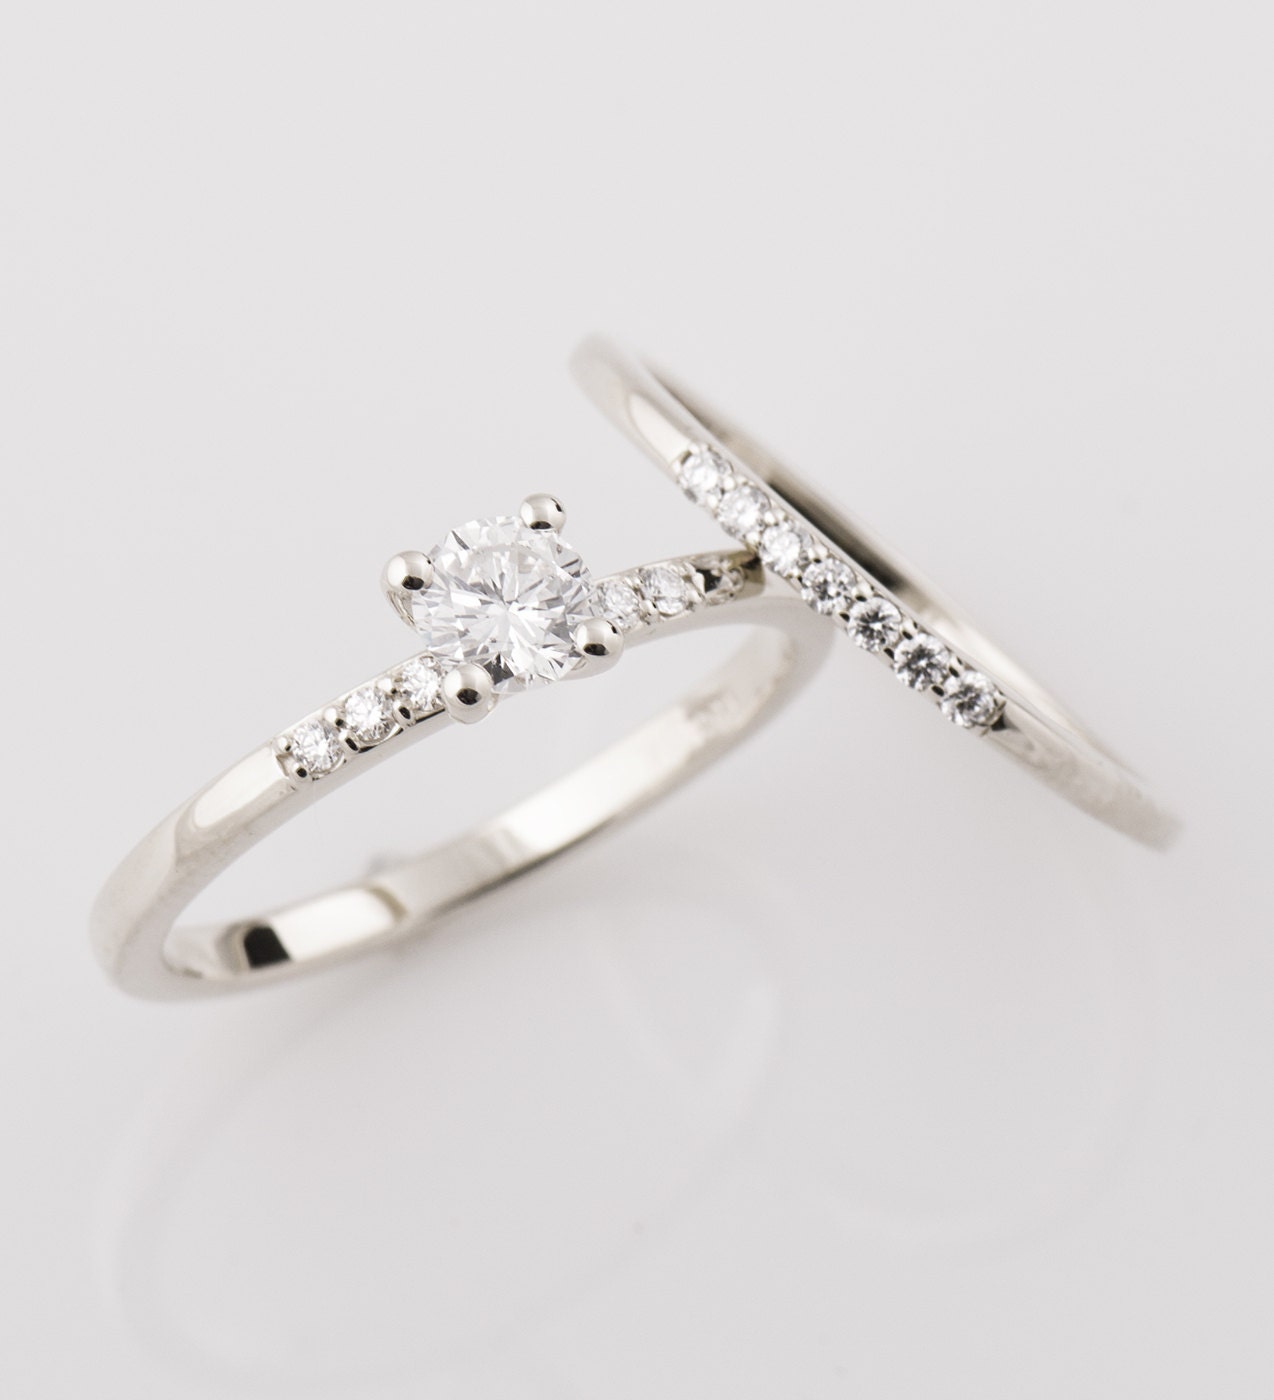 Buy Diamond Ring Set, Engagement Rings Set, 14K White Gold Ring Set, Simple  Diamond Bands, Wedding Sets, Delicate Gold & Diamond Rings. Online in India  - Etsy